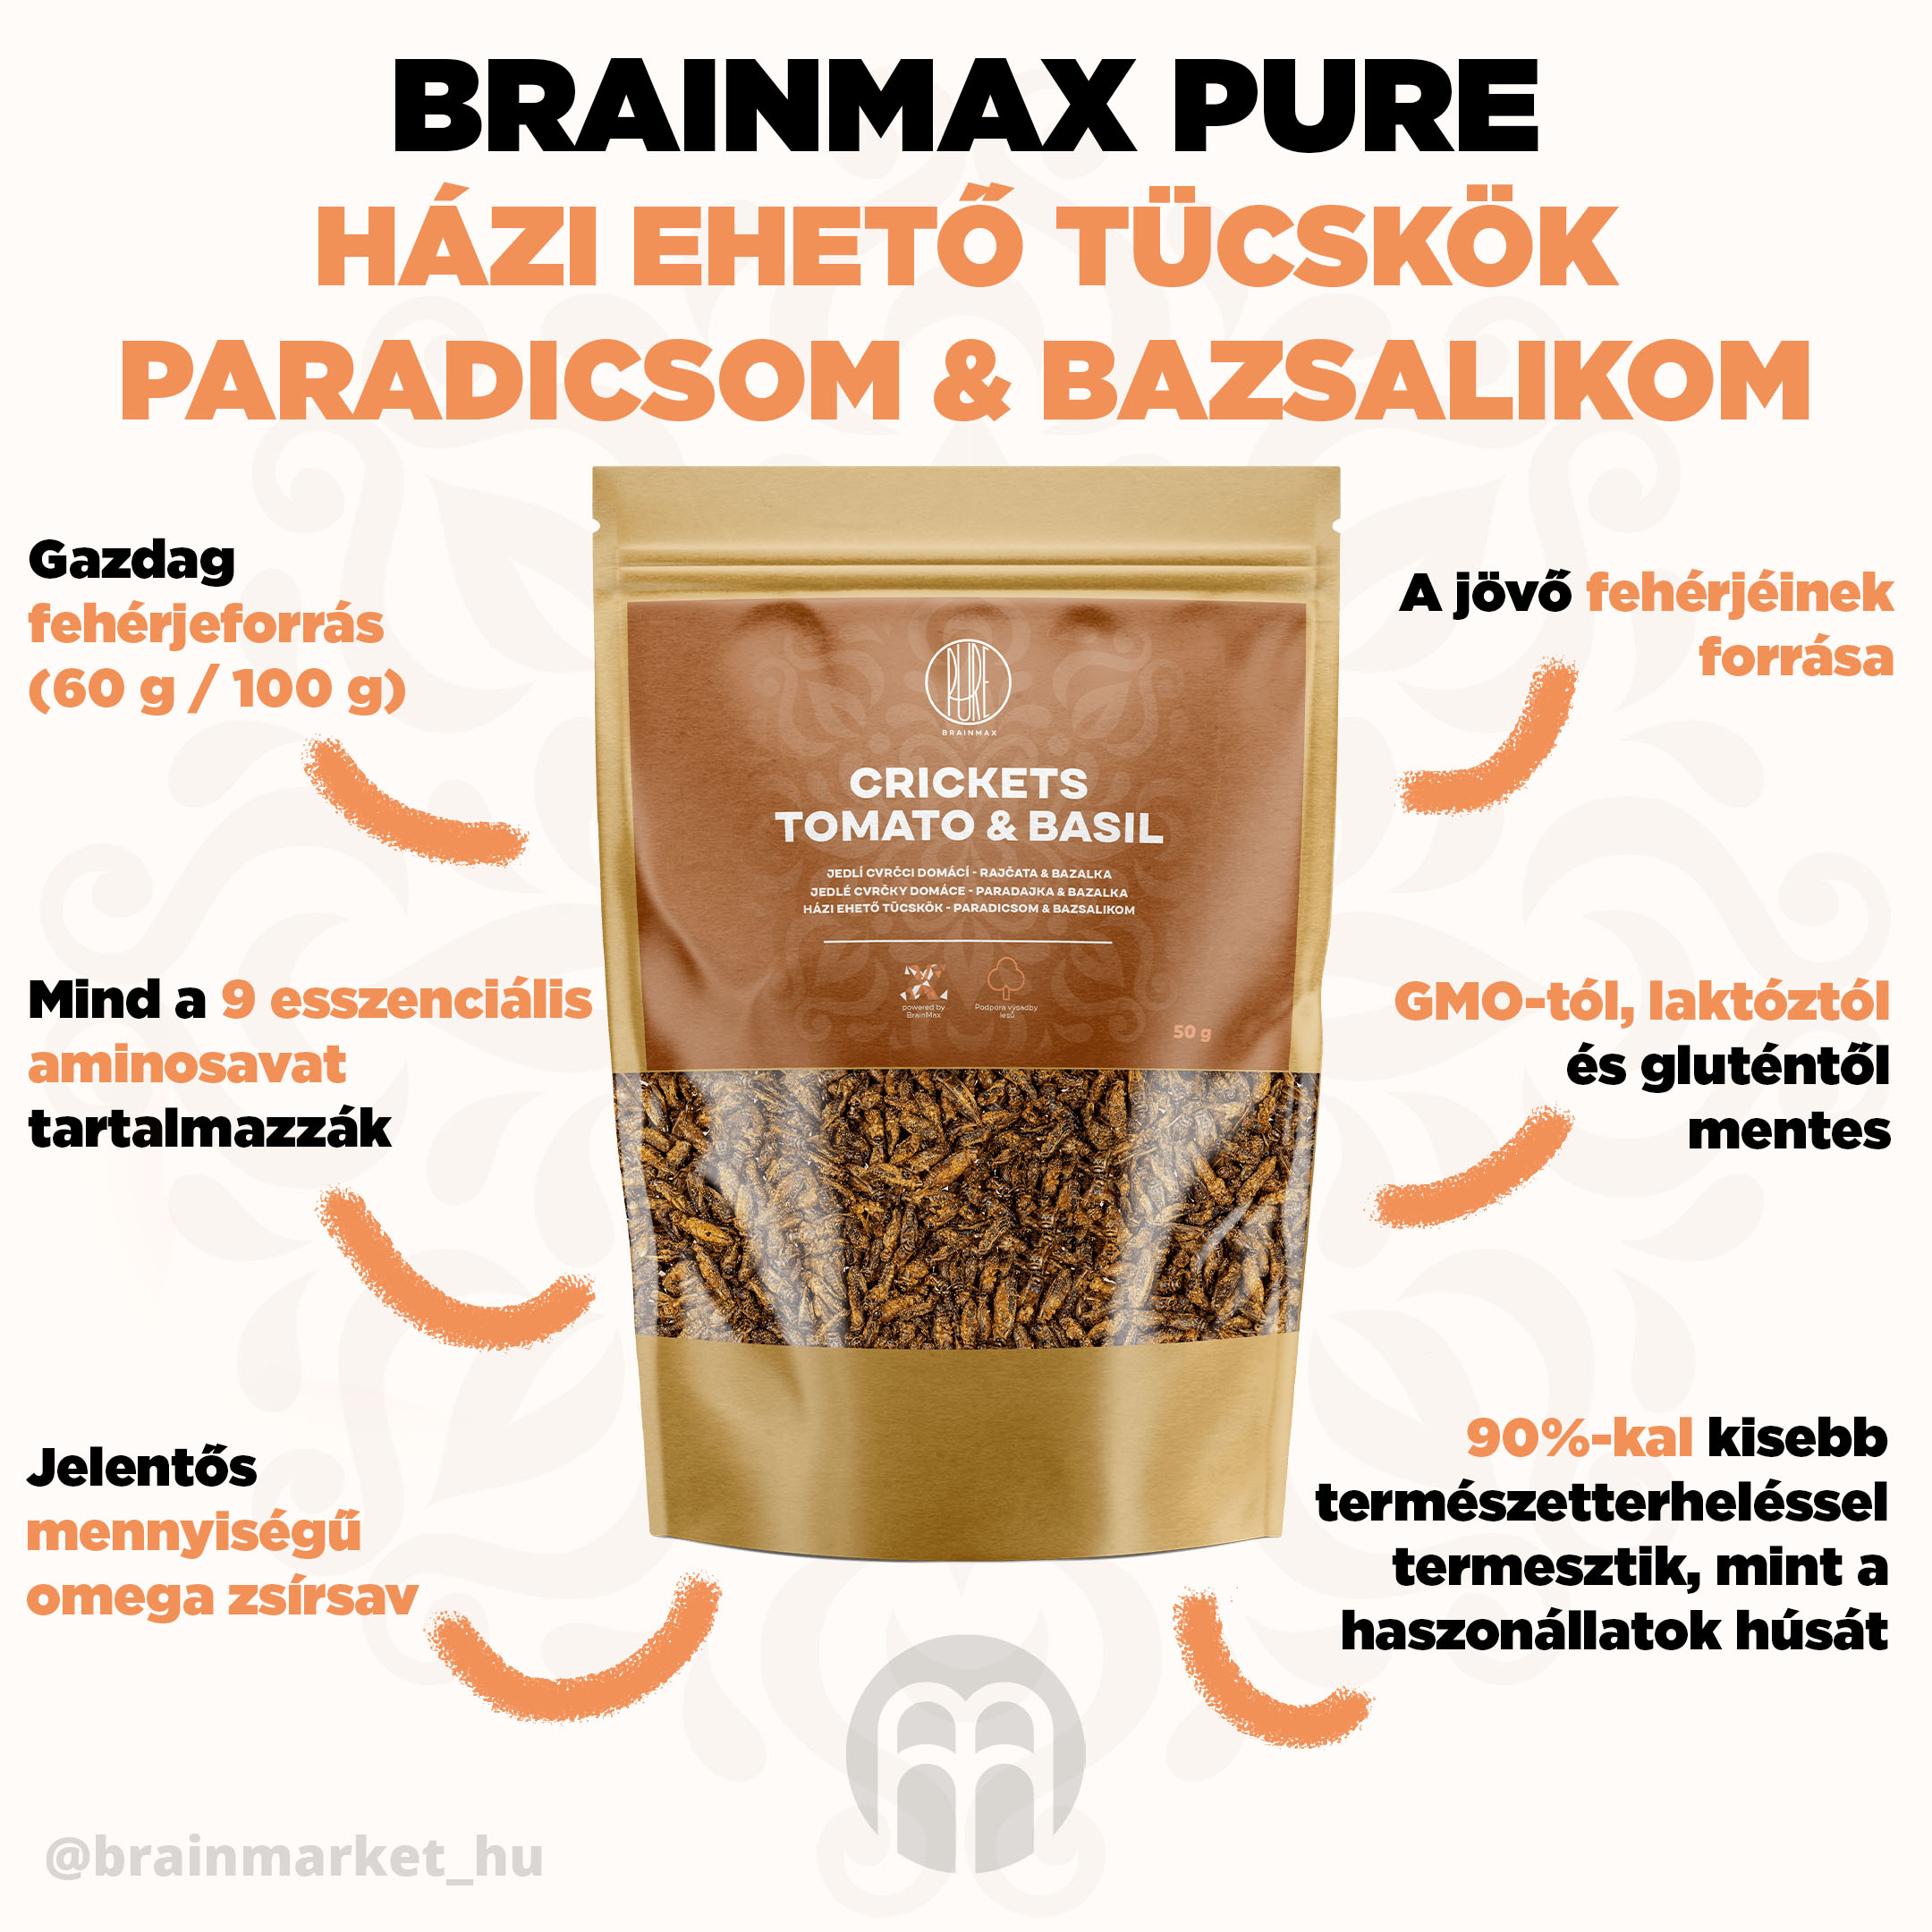 brainmax pure cvrcci paradicsom és bazsalikom infografika brainmarket CZ